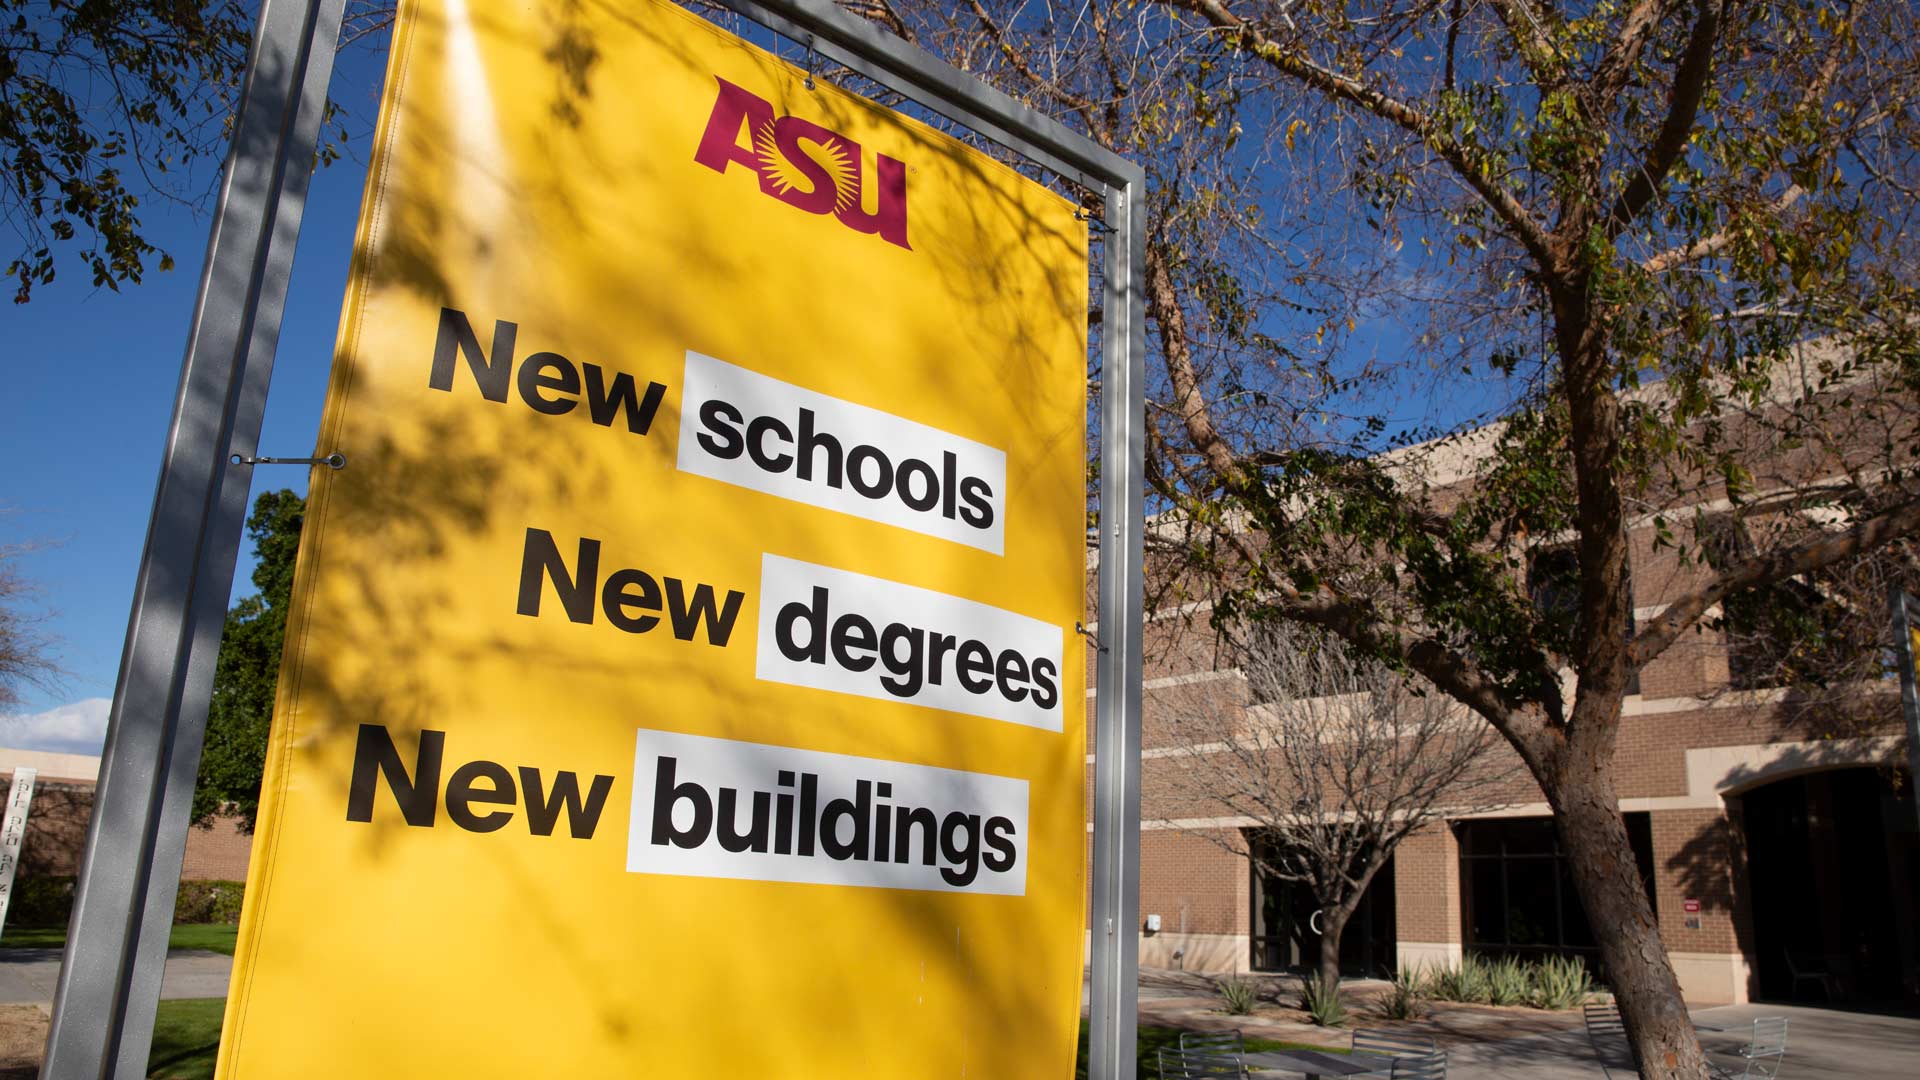 ASU sign - New Schools, New Degrees, New buildings